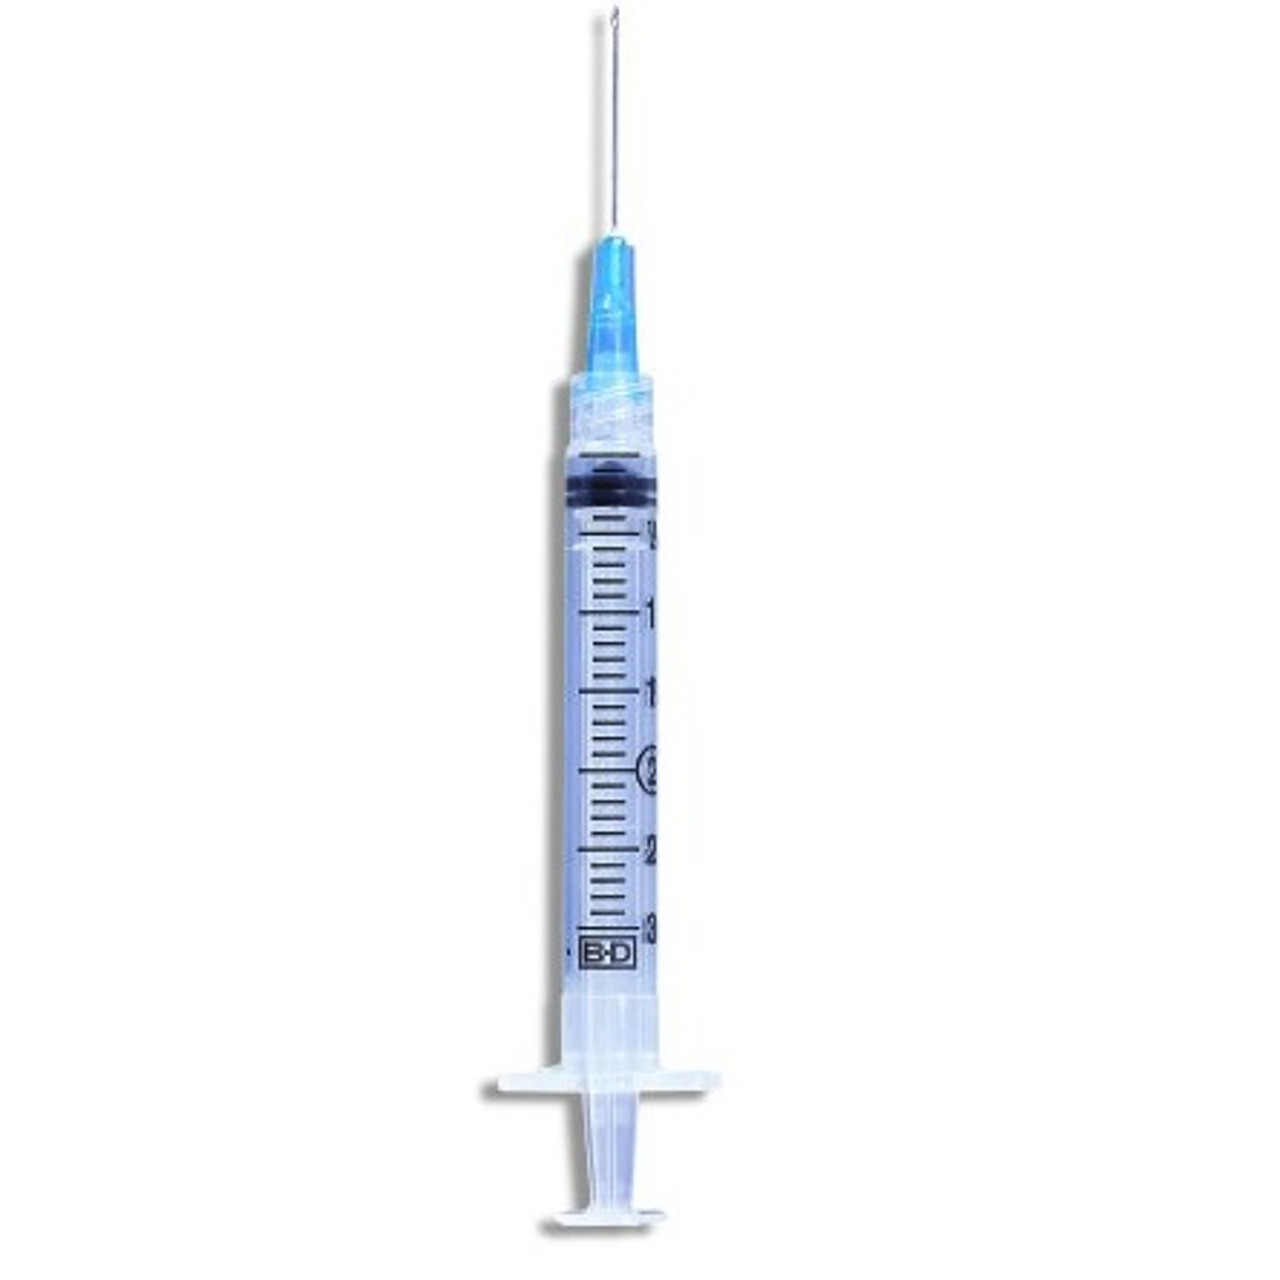 25g X 1 Precisionglide Needle With 3ml Luer Lok Syringe